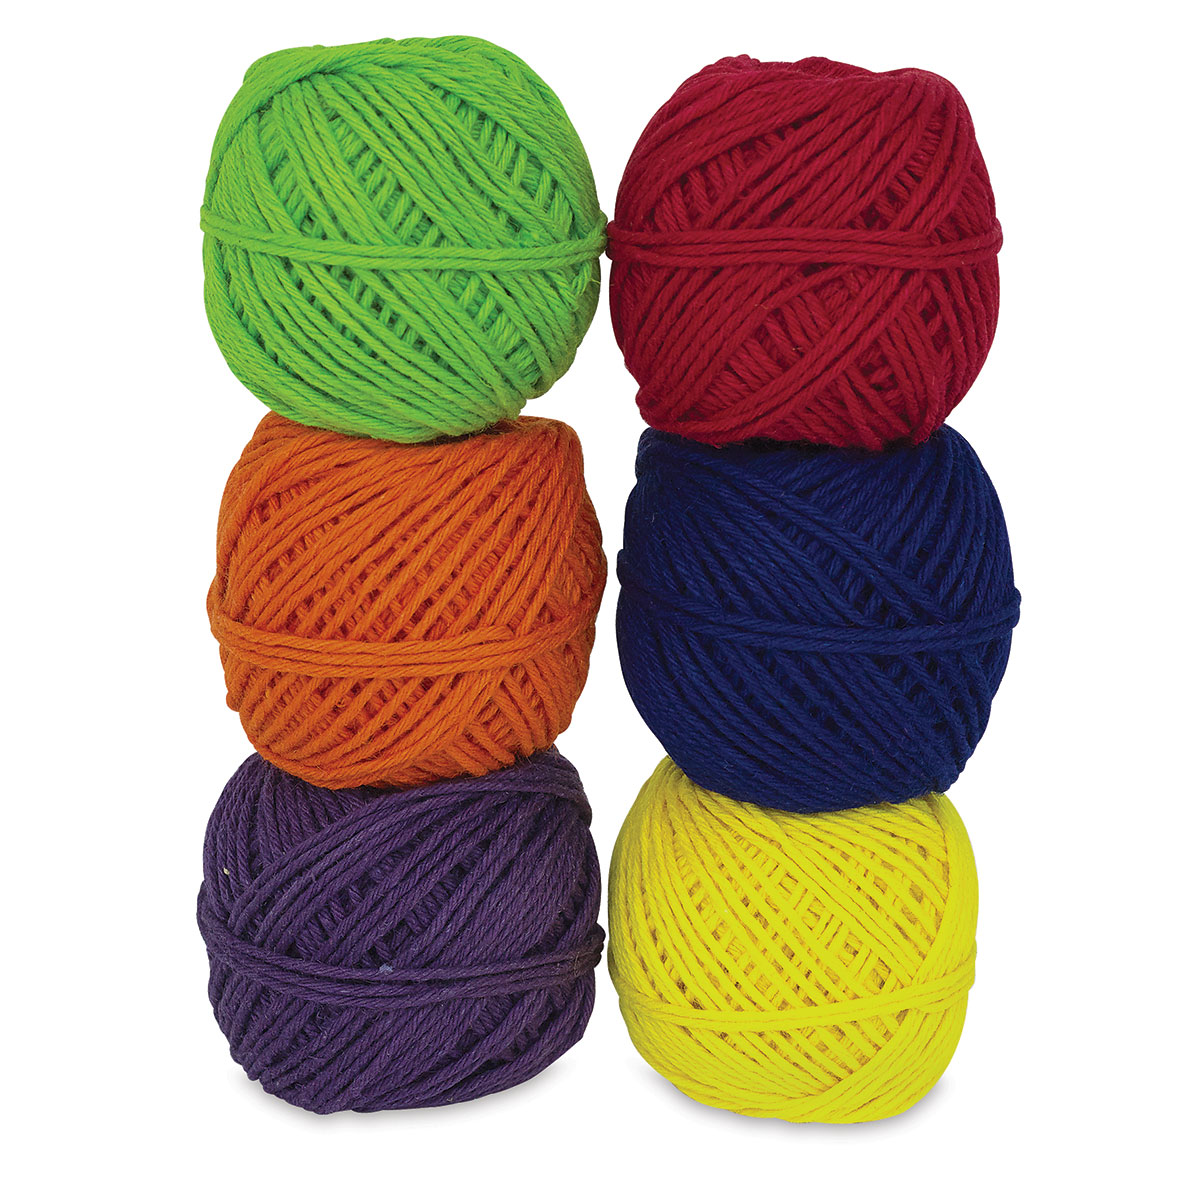 Hemp Yarn Balls - Hemp Yarn Supplier - Hemptique